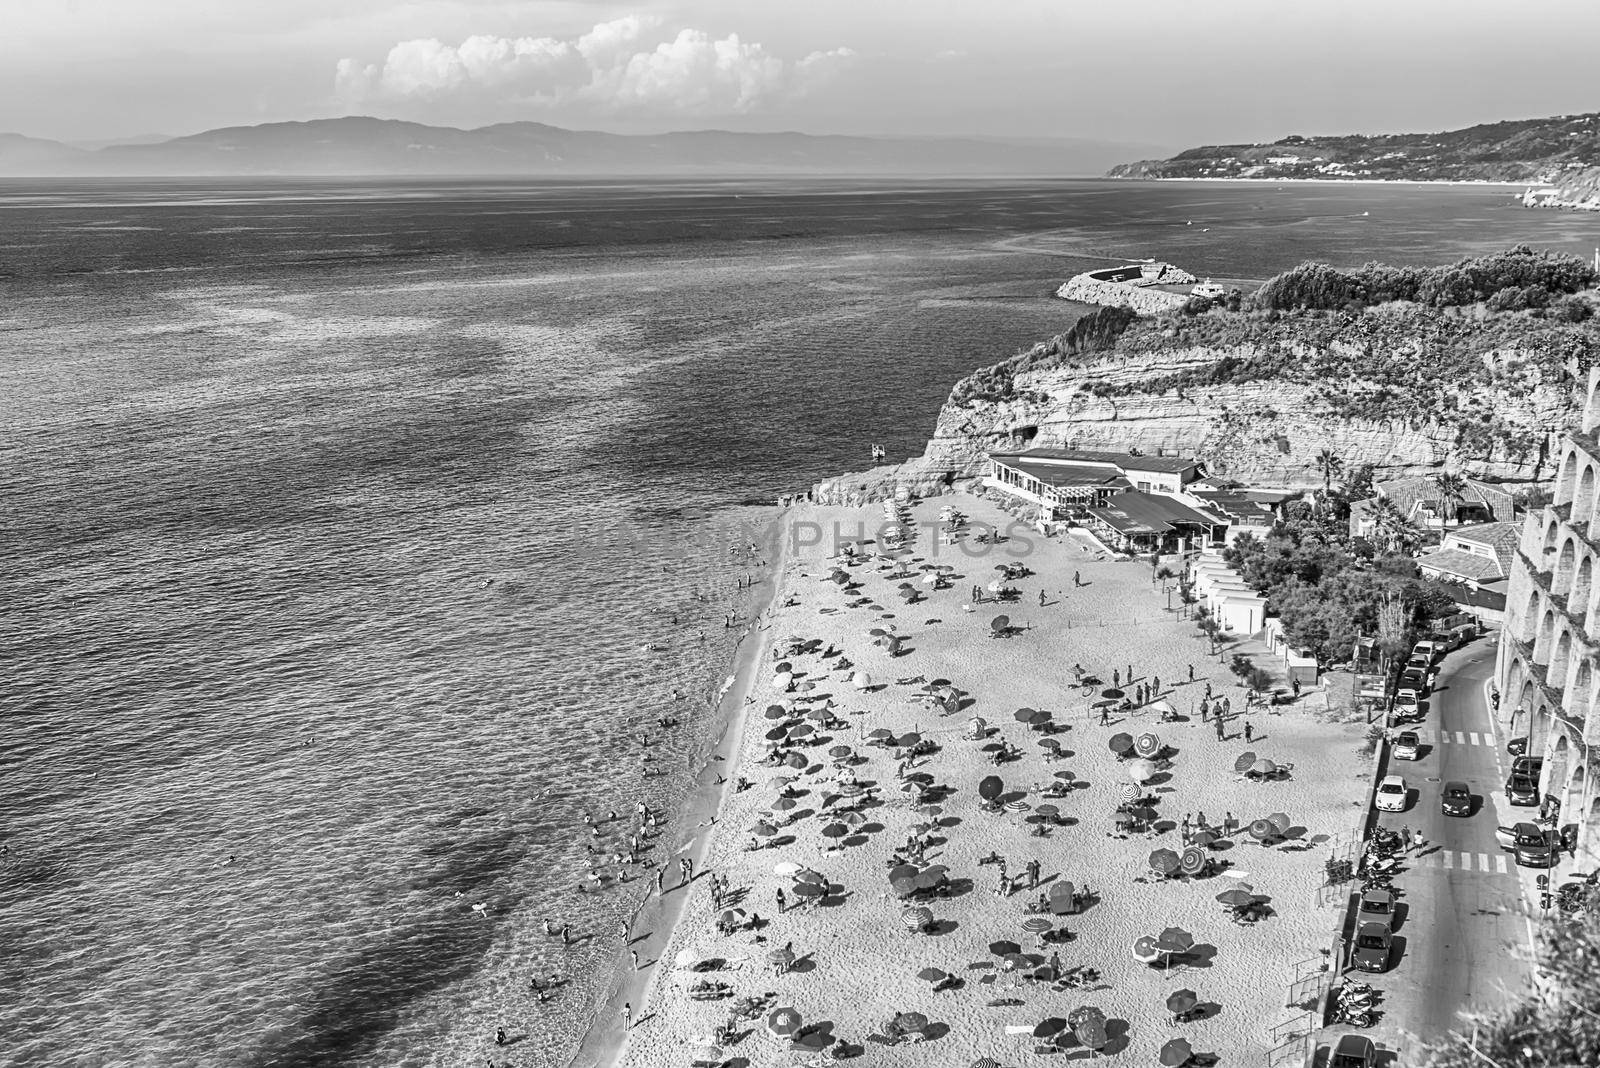 View over the main beach in Tropea, Calabria, Italy by marcorubino